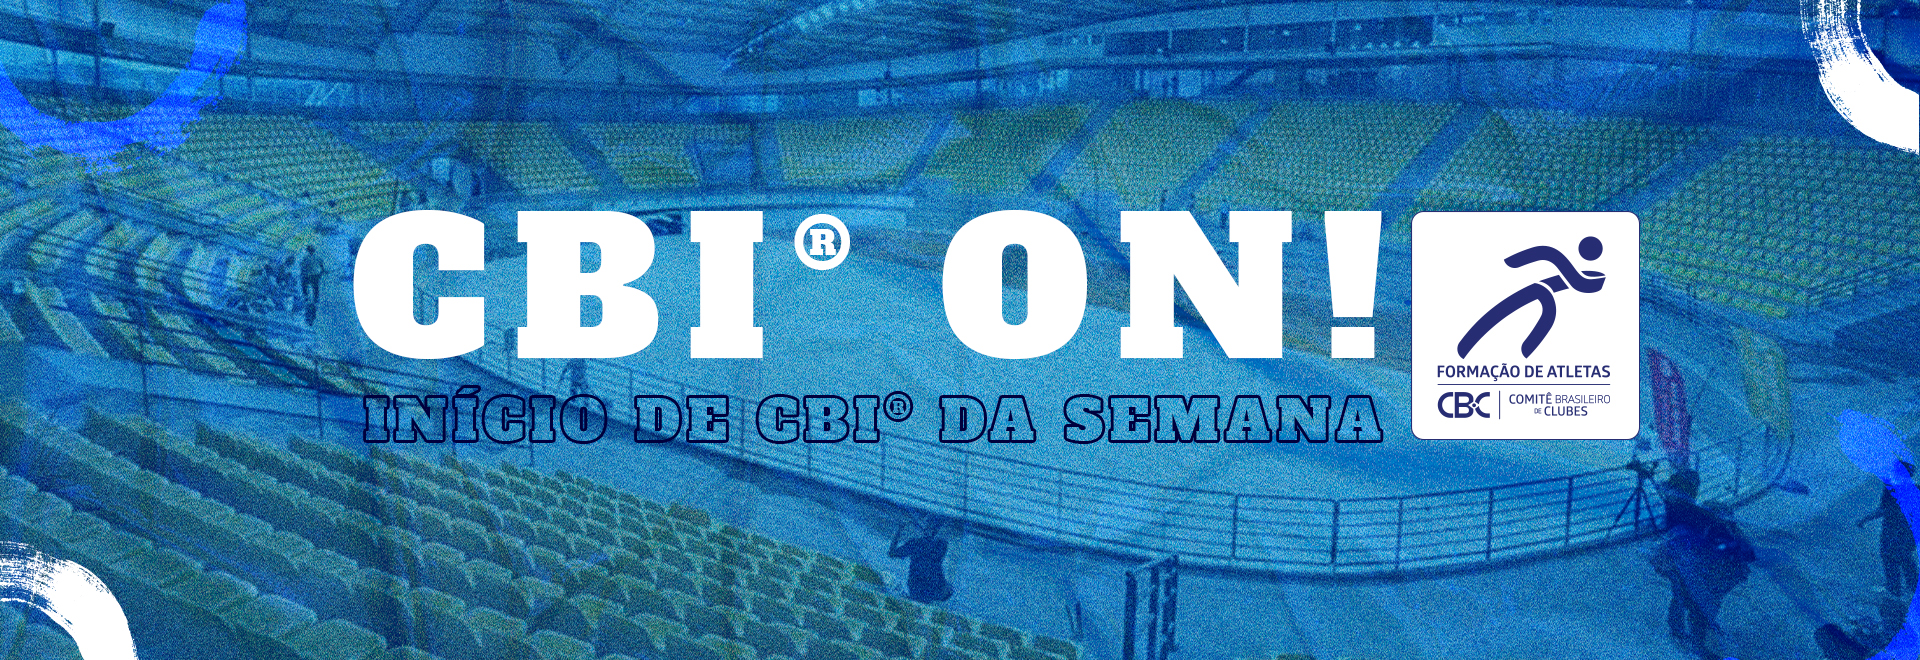 CBI® ON: São Paulo/SP será palco de dois CBI® na próxima semana